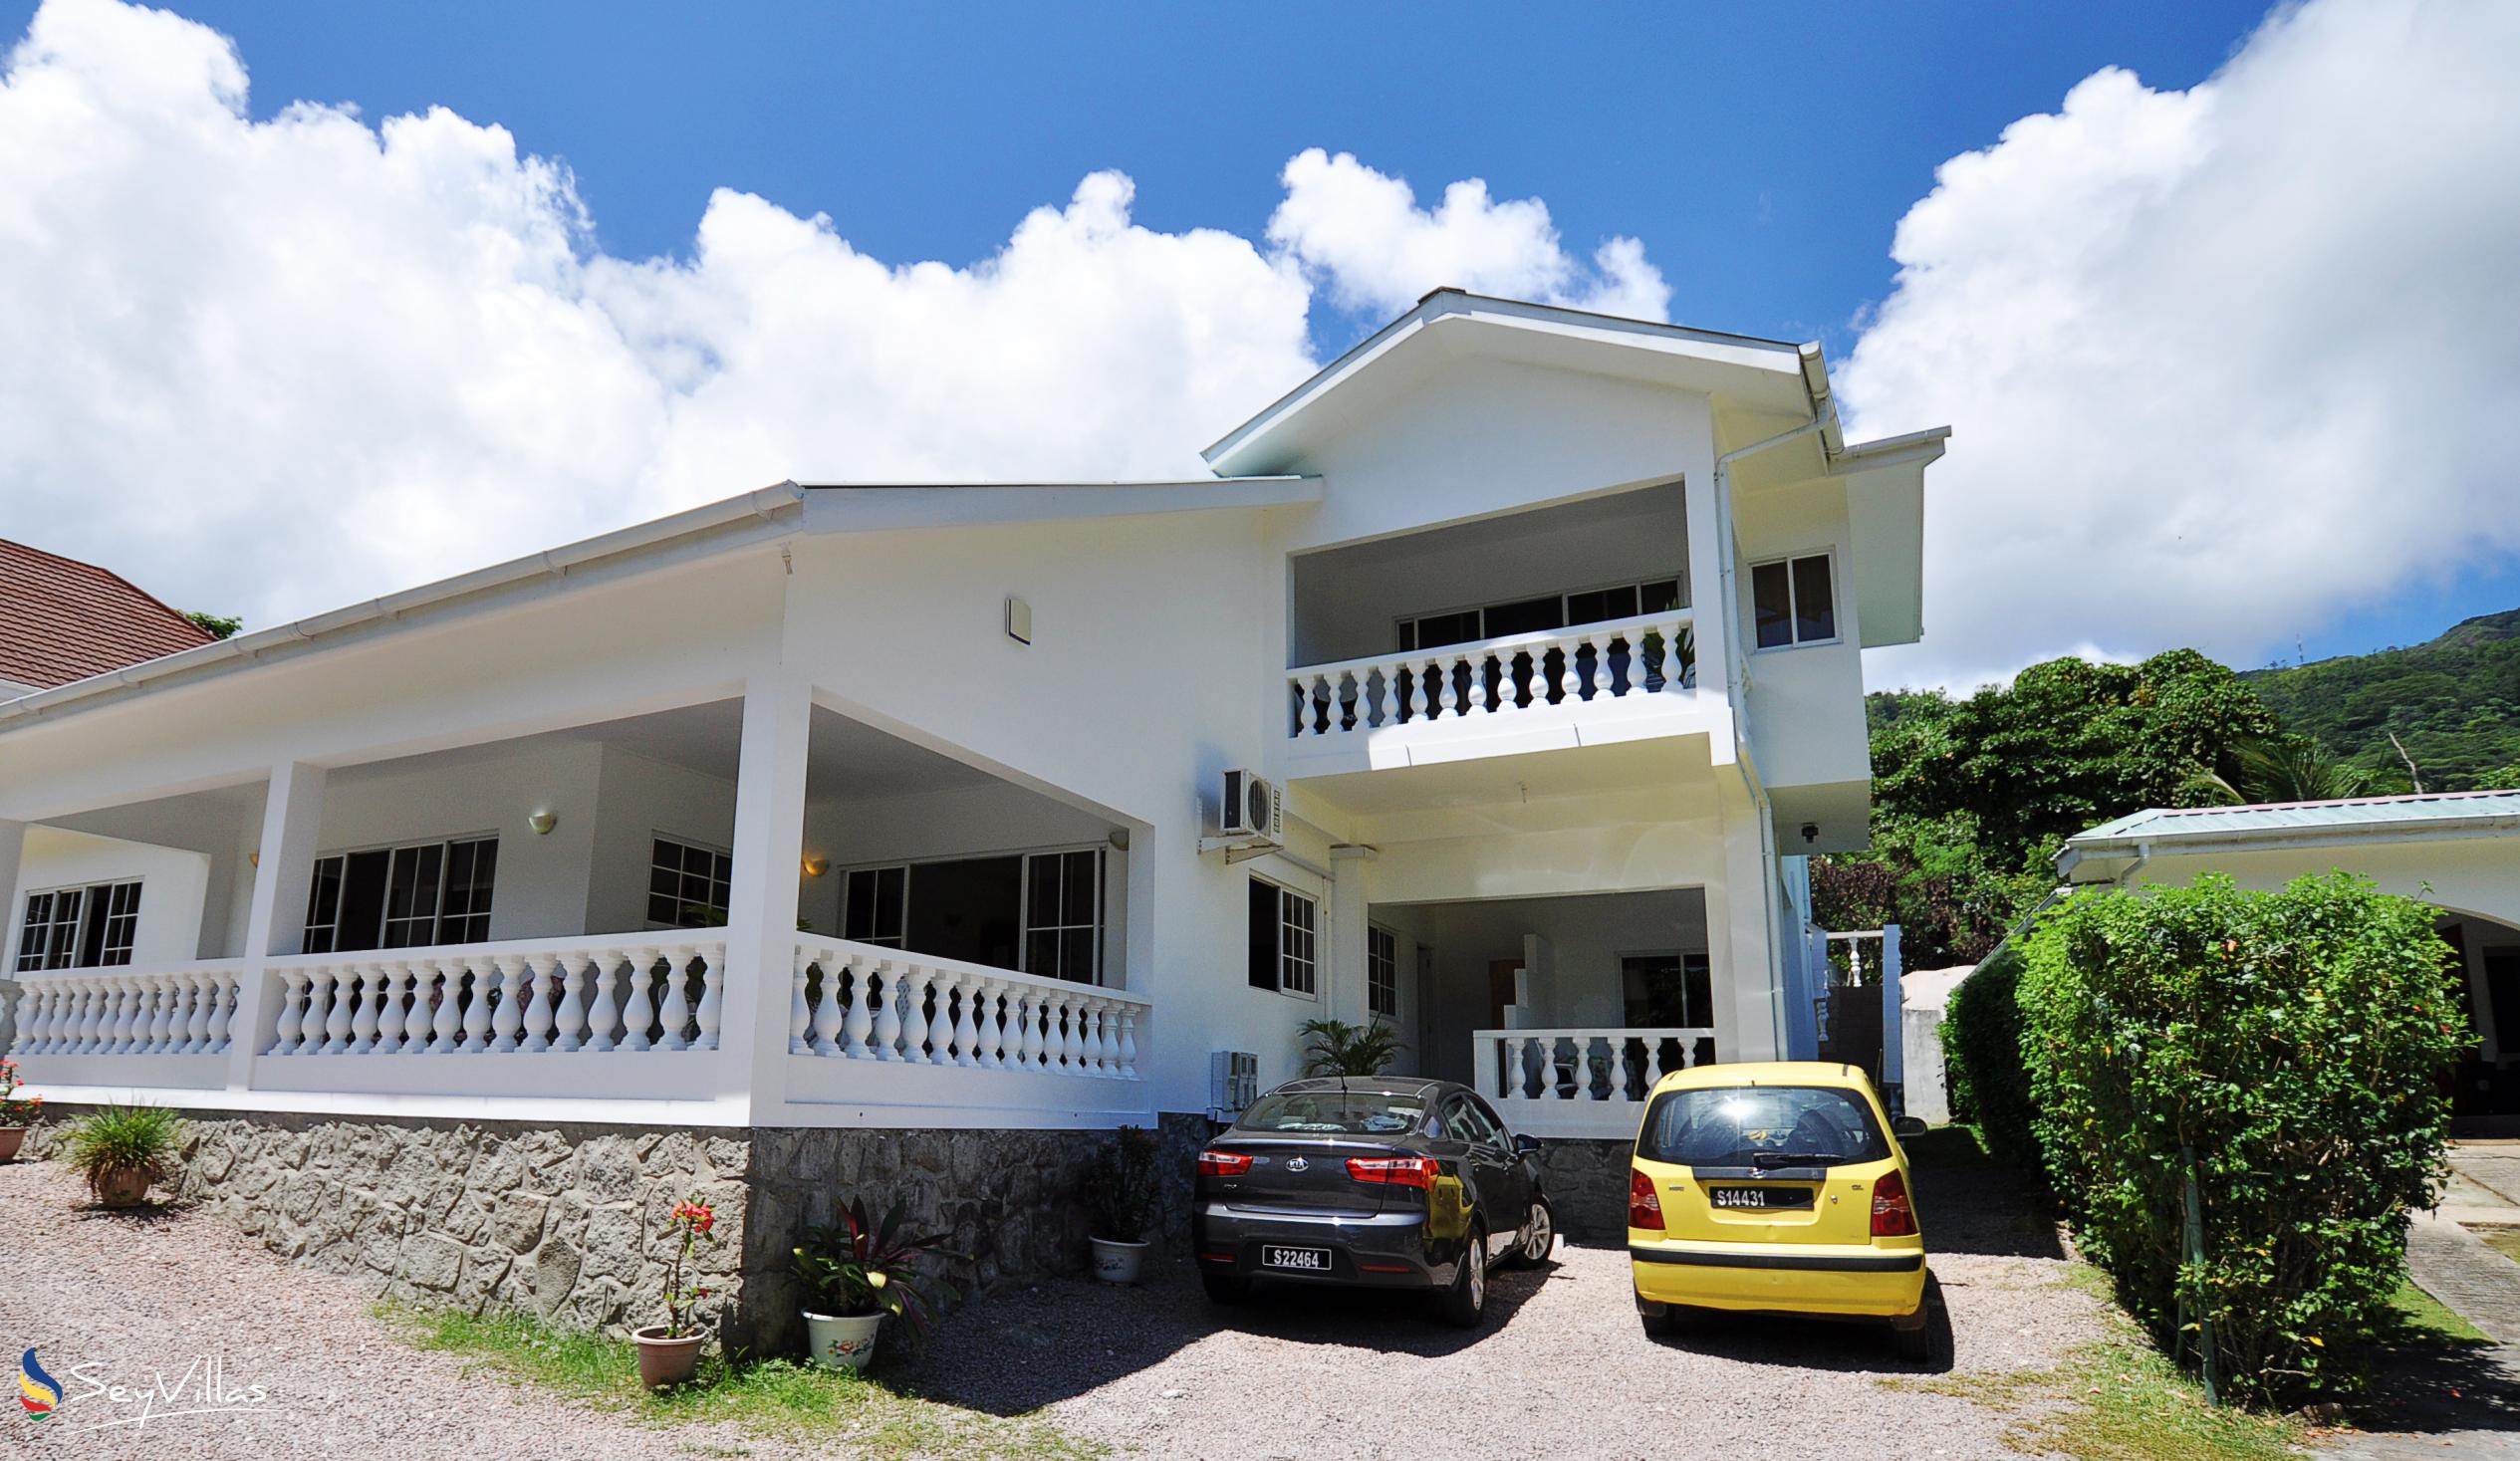 Photo 1: Row's Villa - Outdoor area - Mahé (Seychelles)